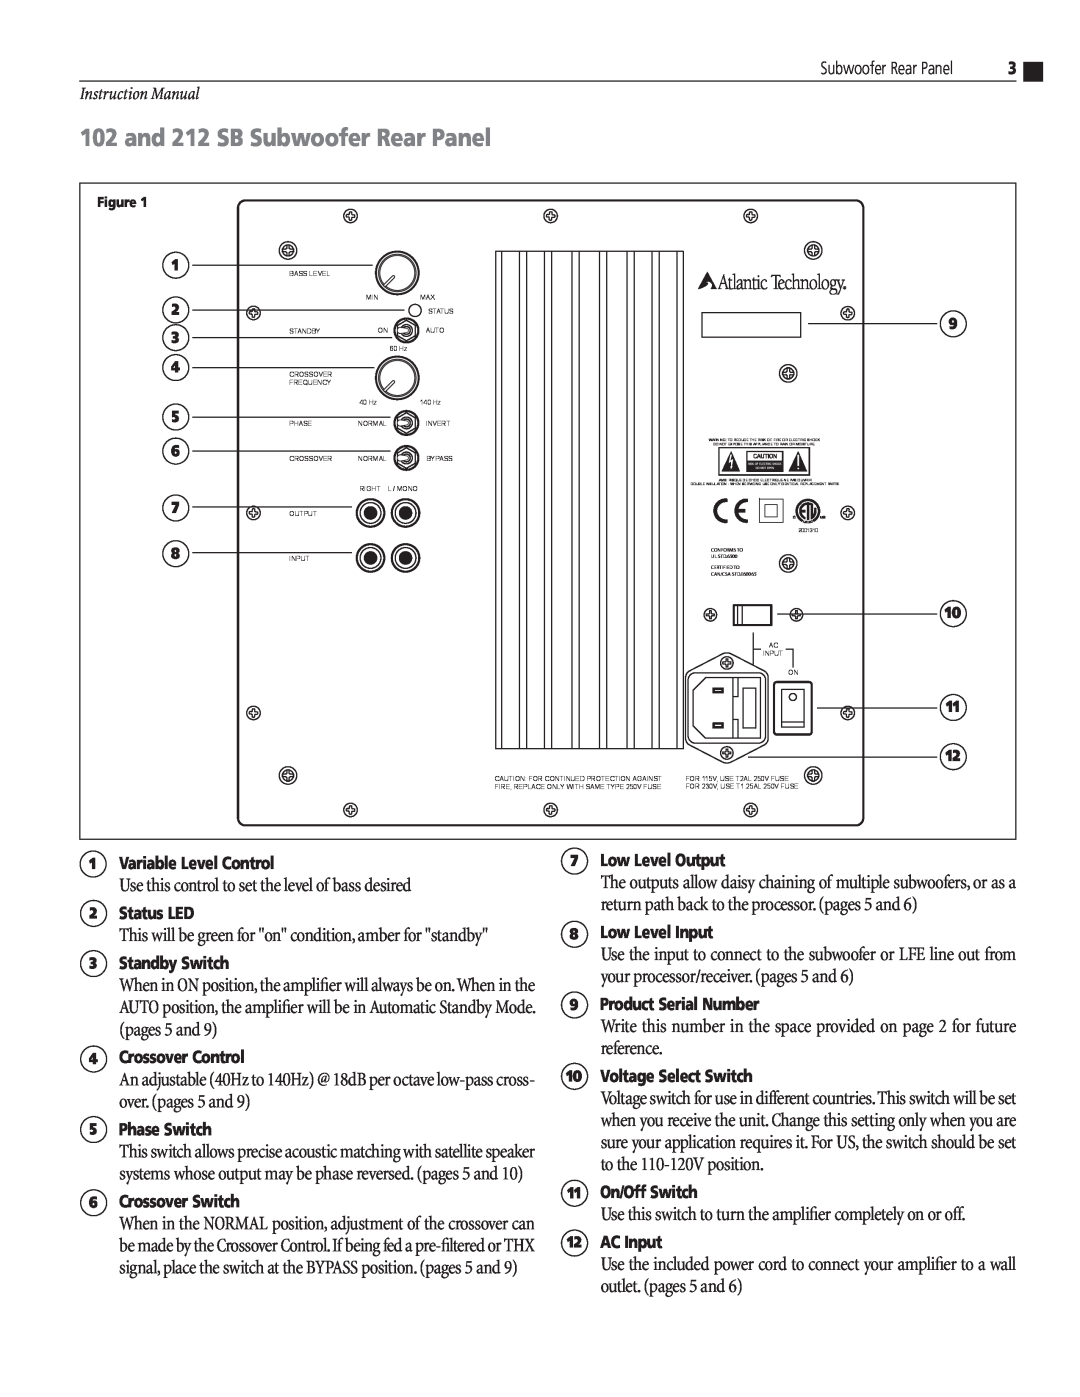 Atlantic Technology 102 SB, 422 SB instruction manual and 212 SB Subwoofer Rear Panel 